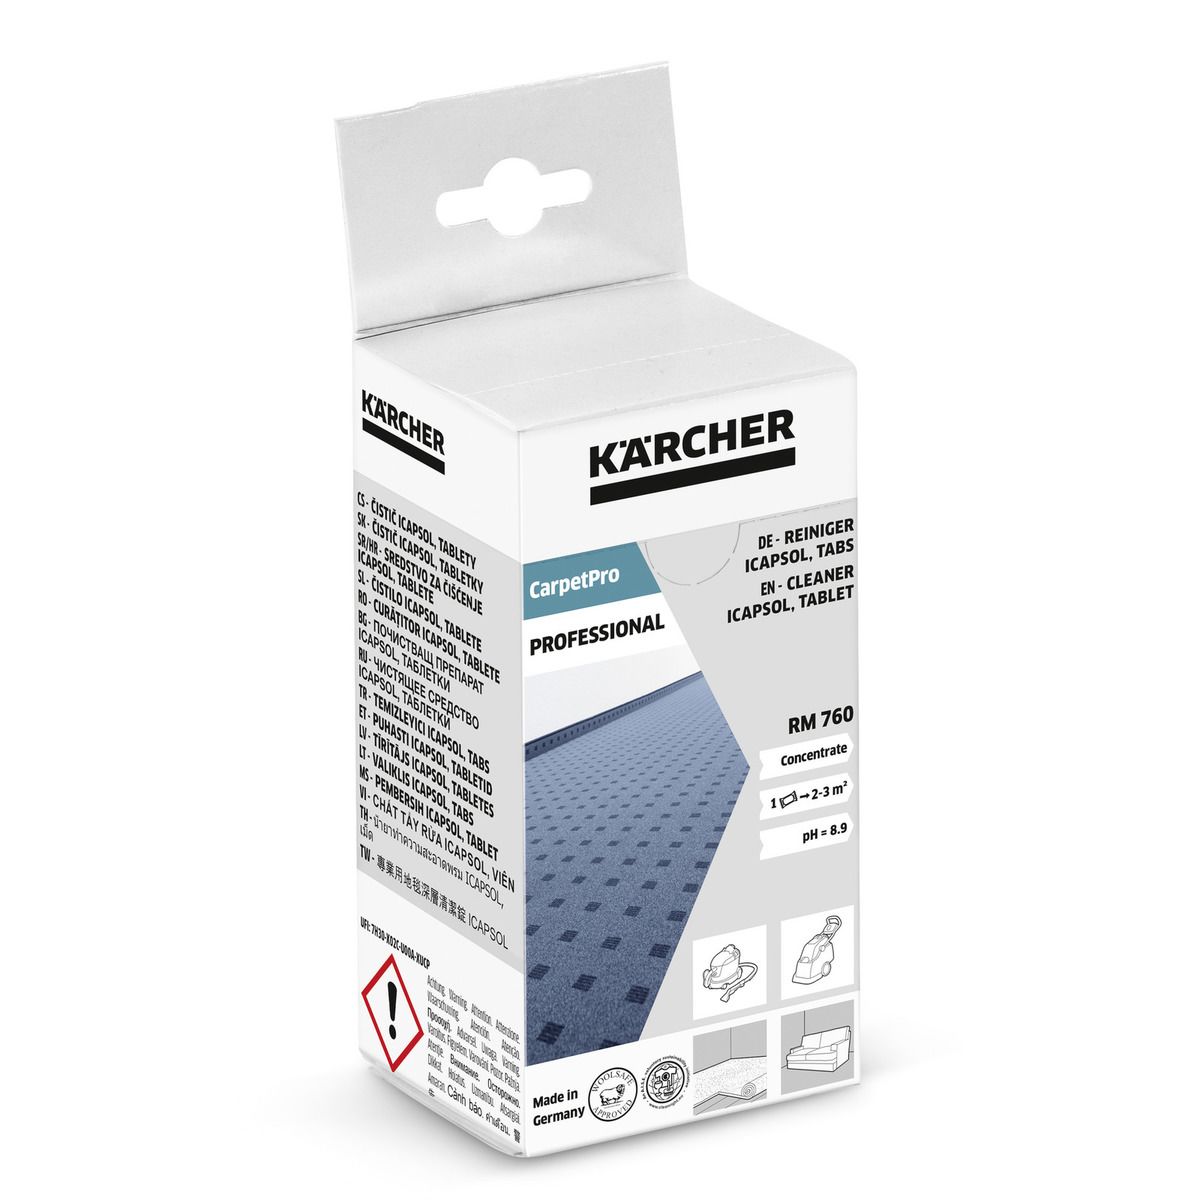 Karcher Multi-purpose Cleaner 300 g Carton